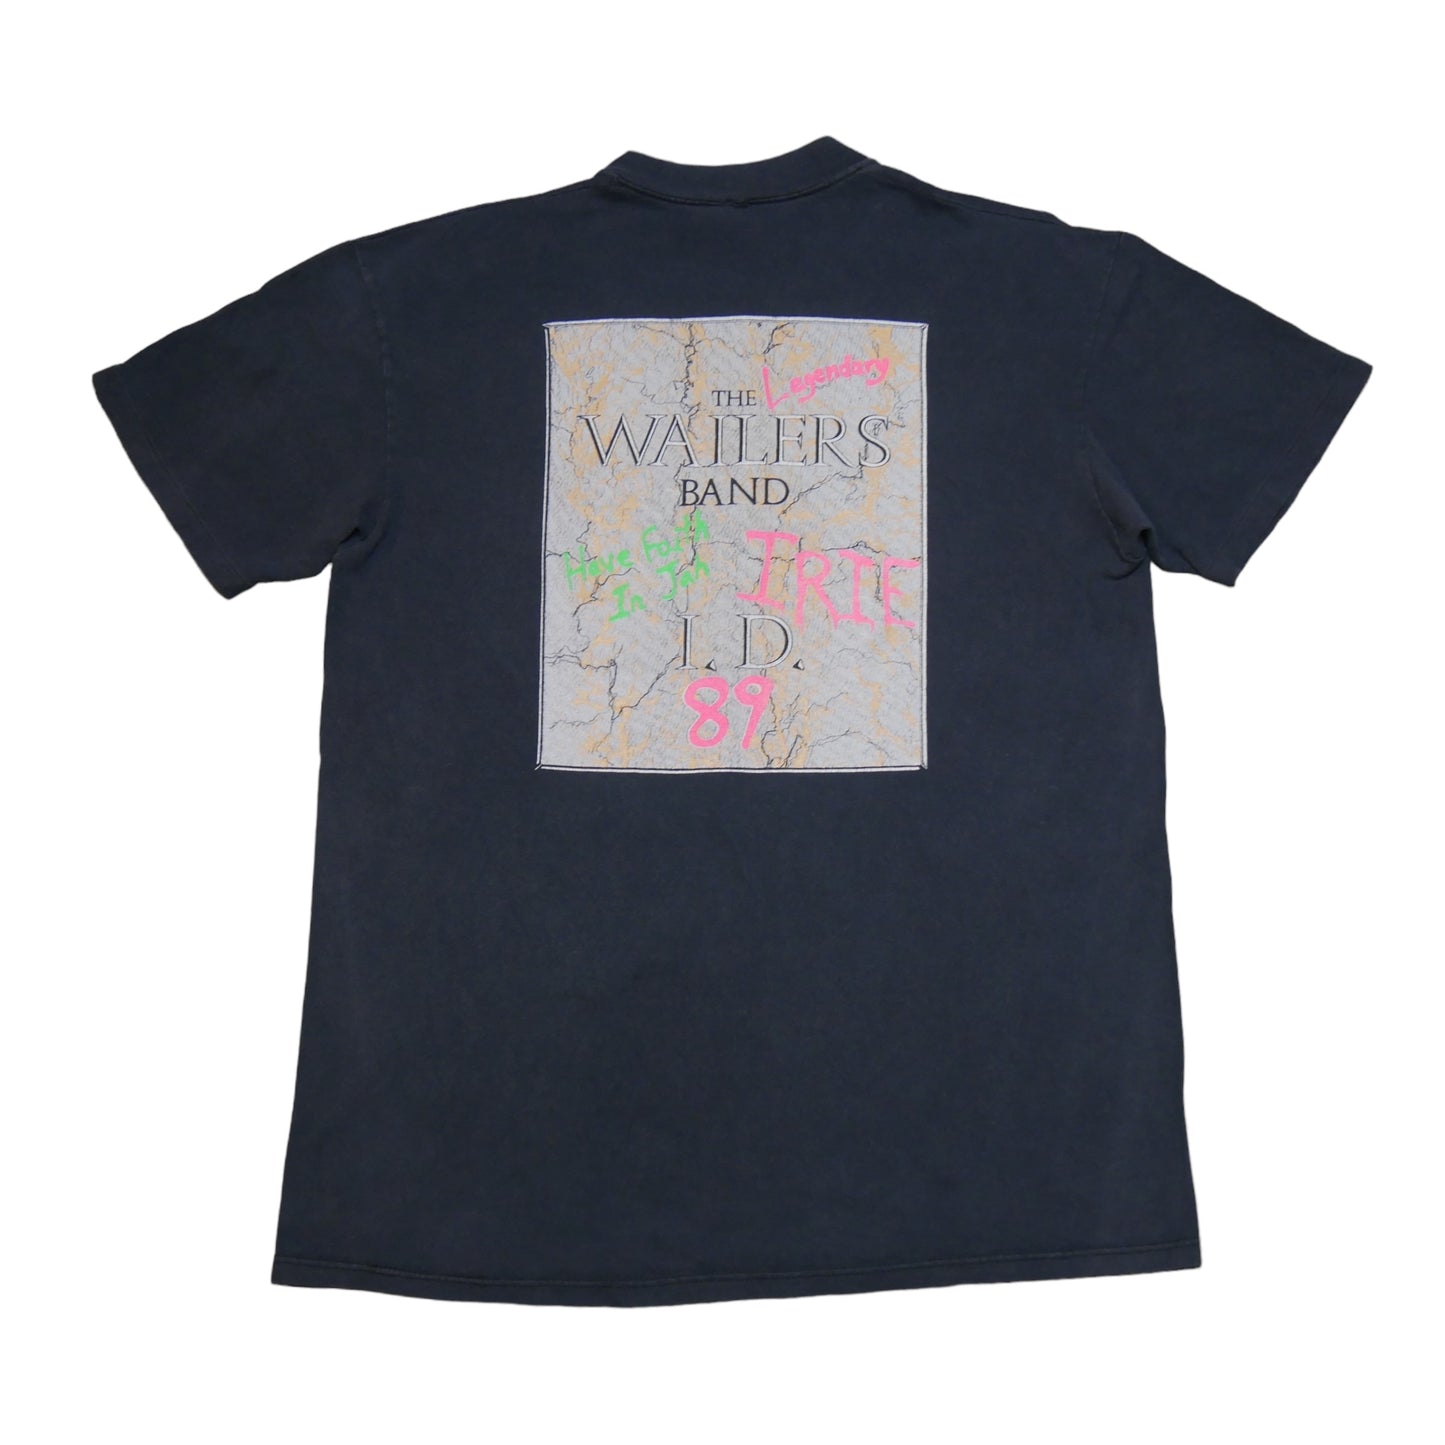 The Wailers Band 1989 Shirt - Large